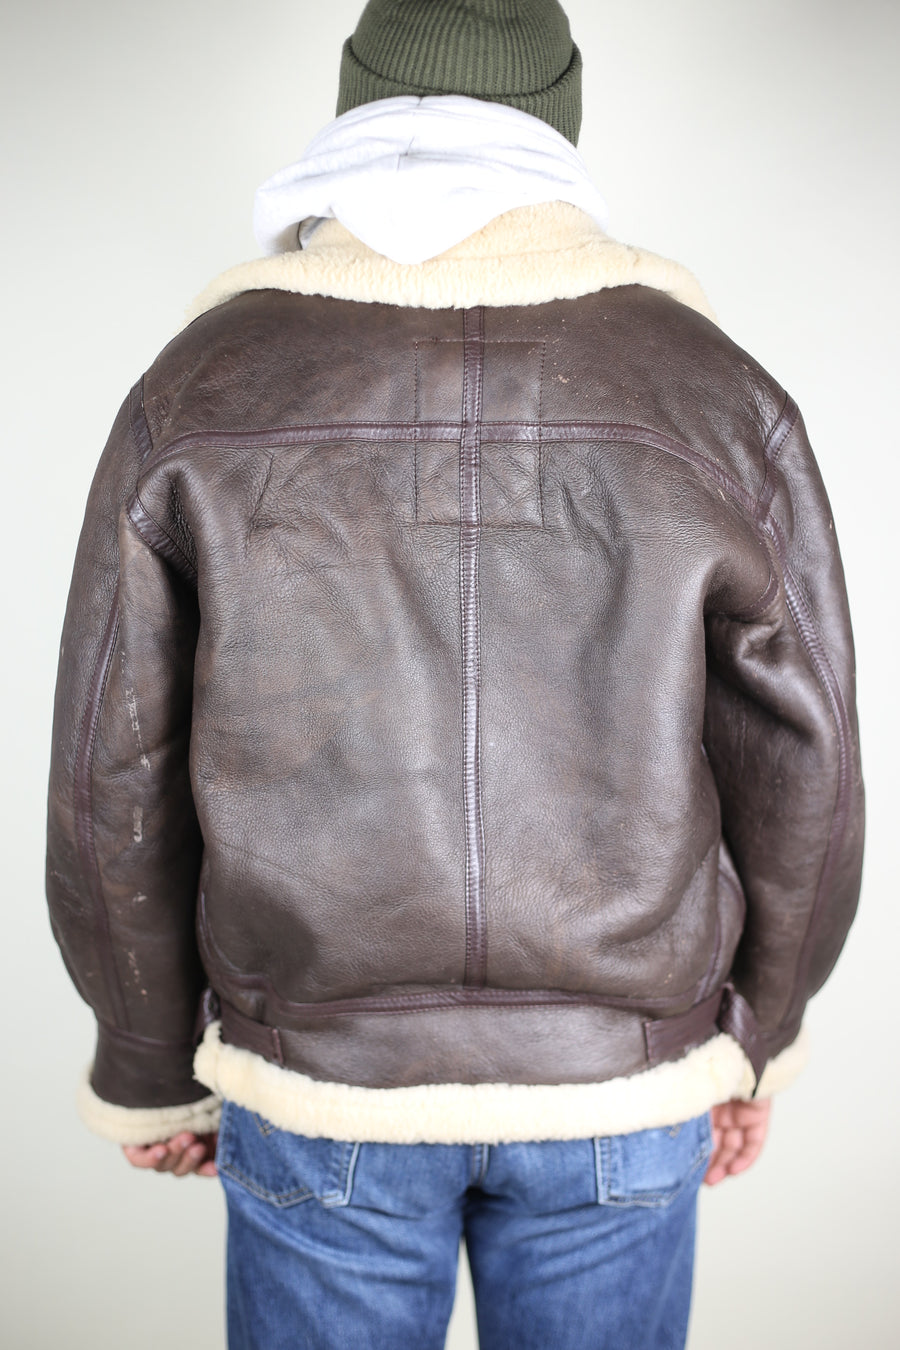 B3 aviator shearling jacket - XL -